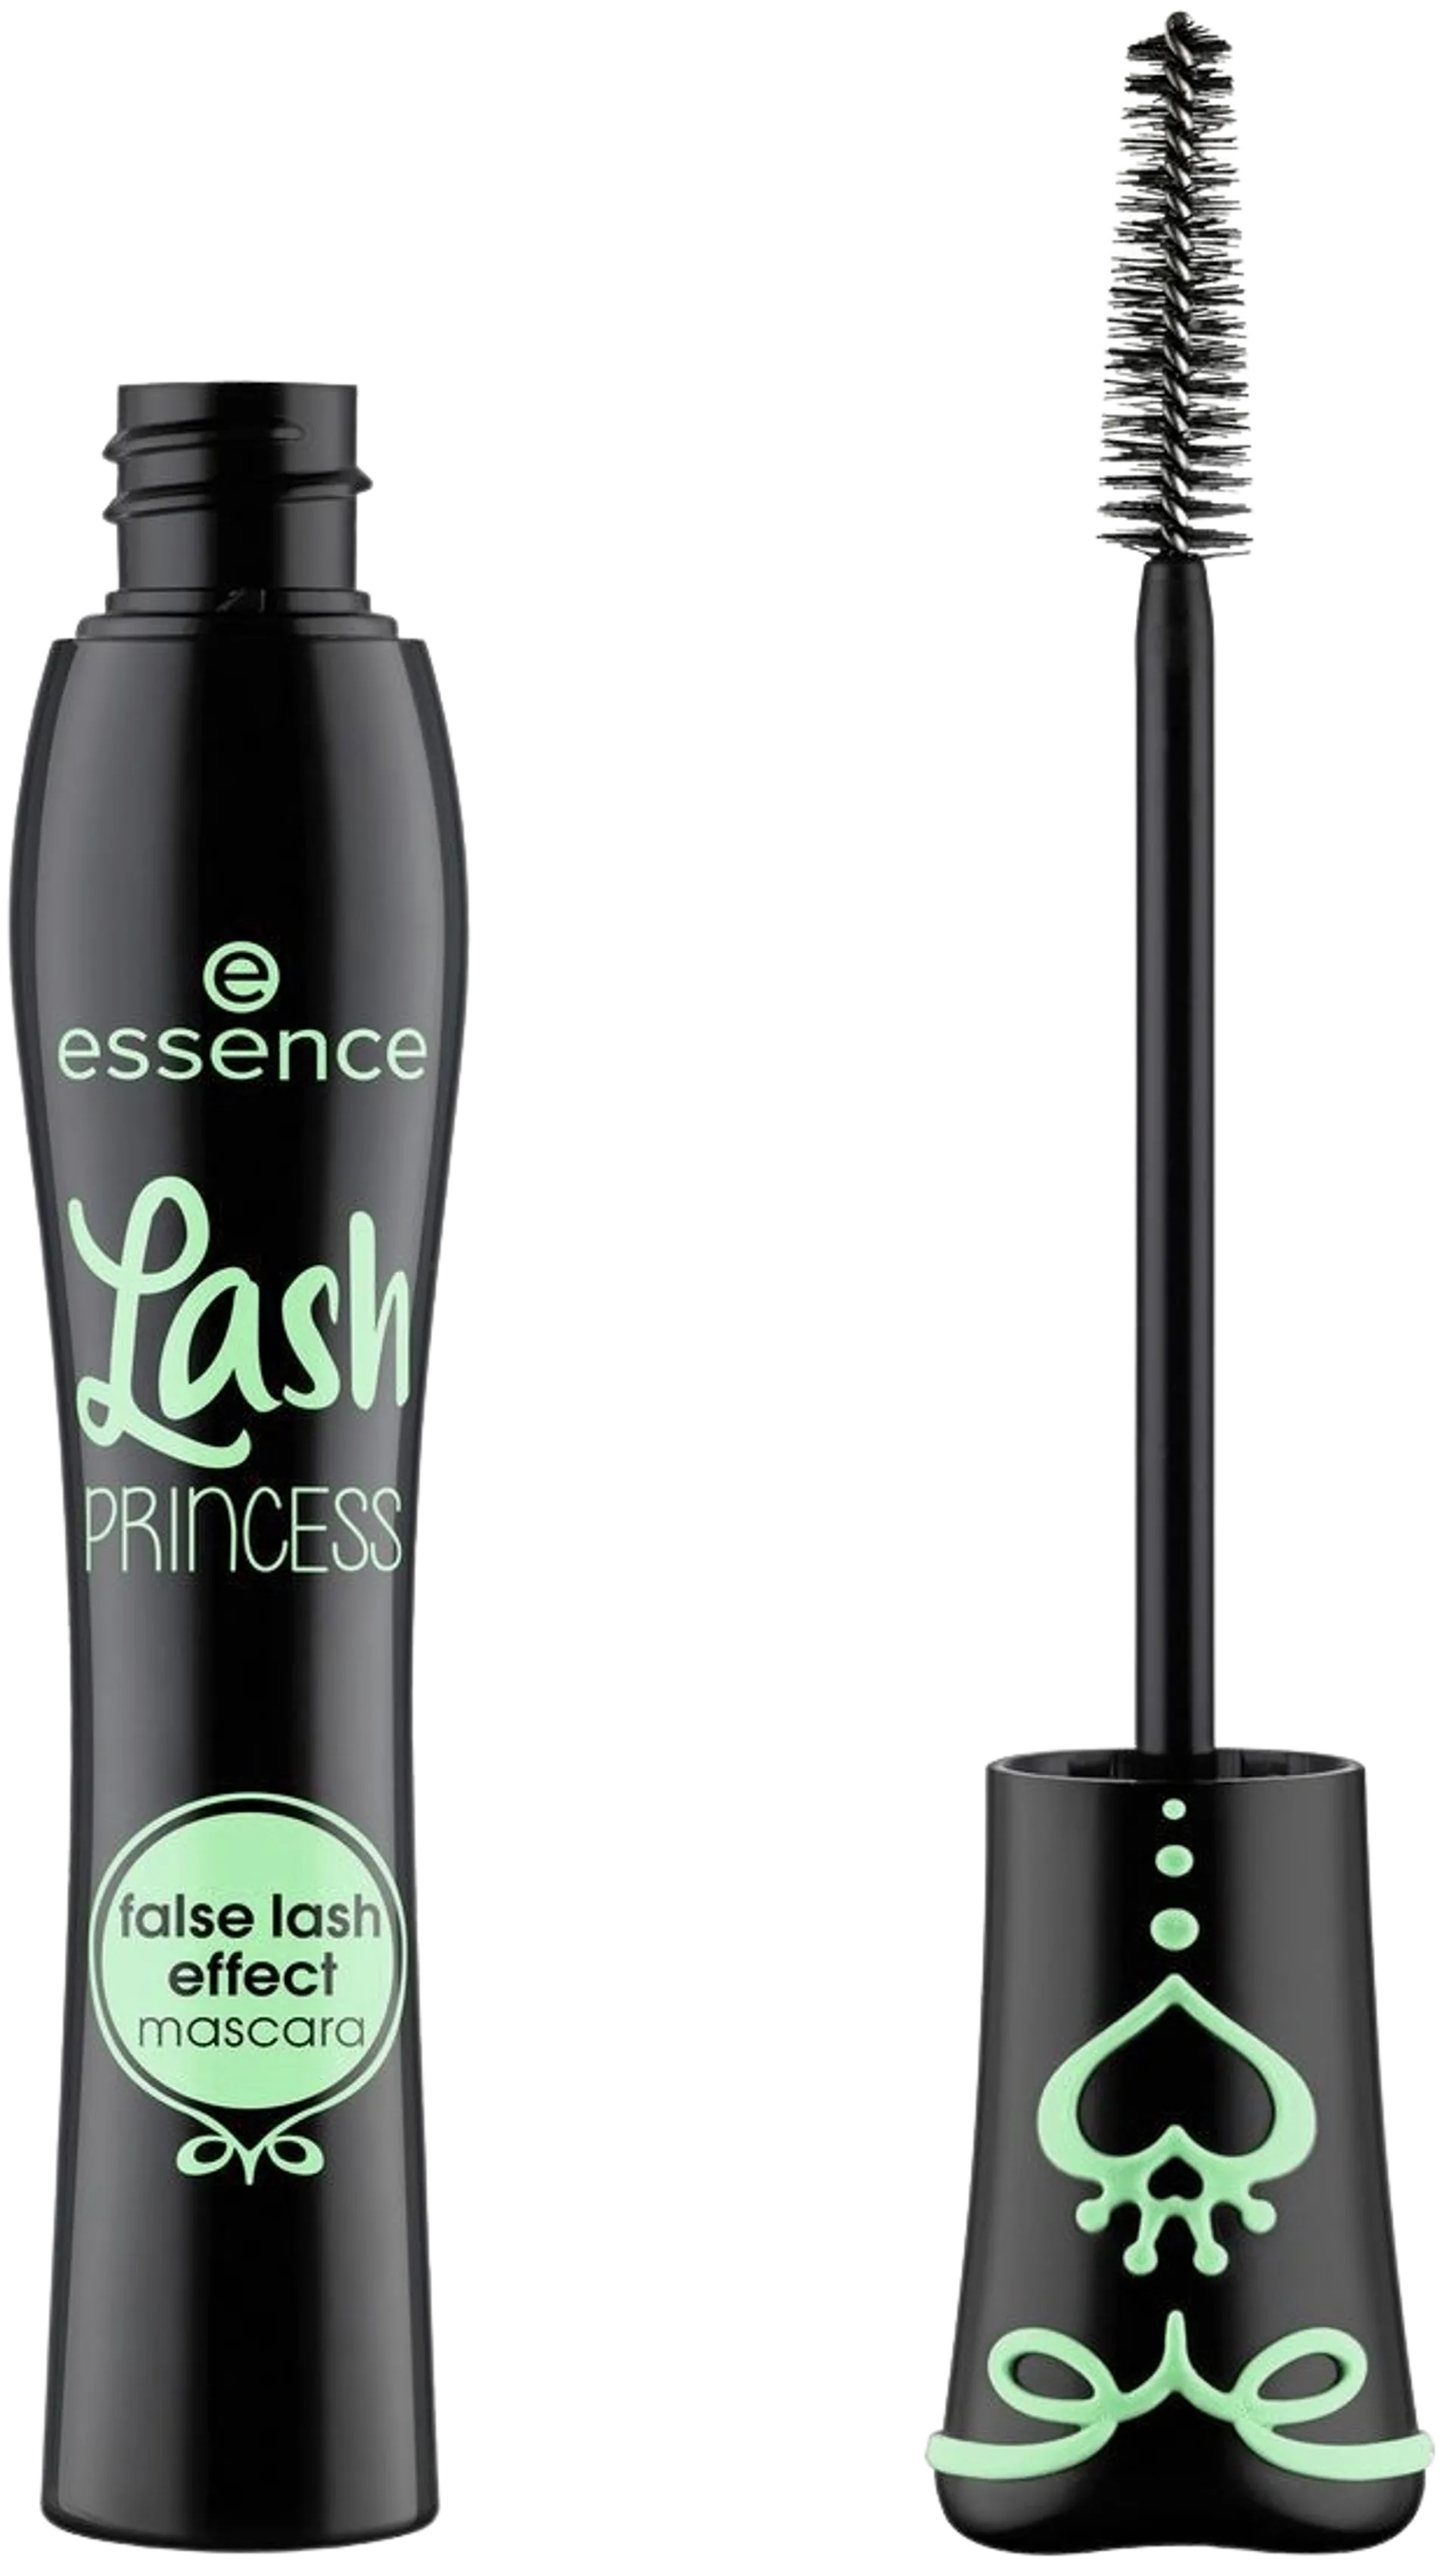 essence Lash PRINCESS false lash effect mascara 12 ml - 1